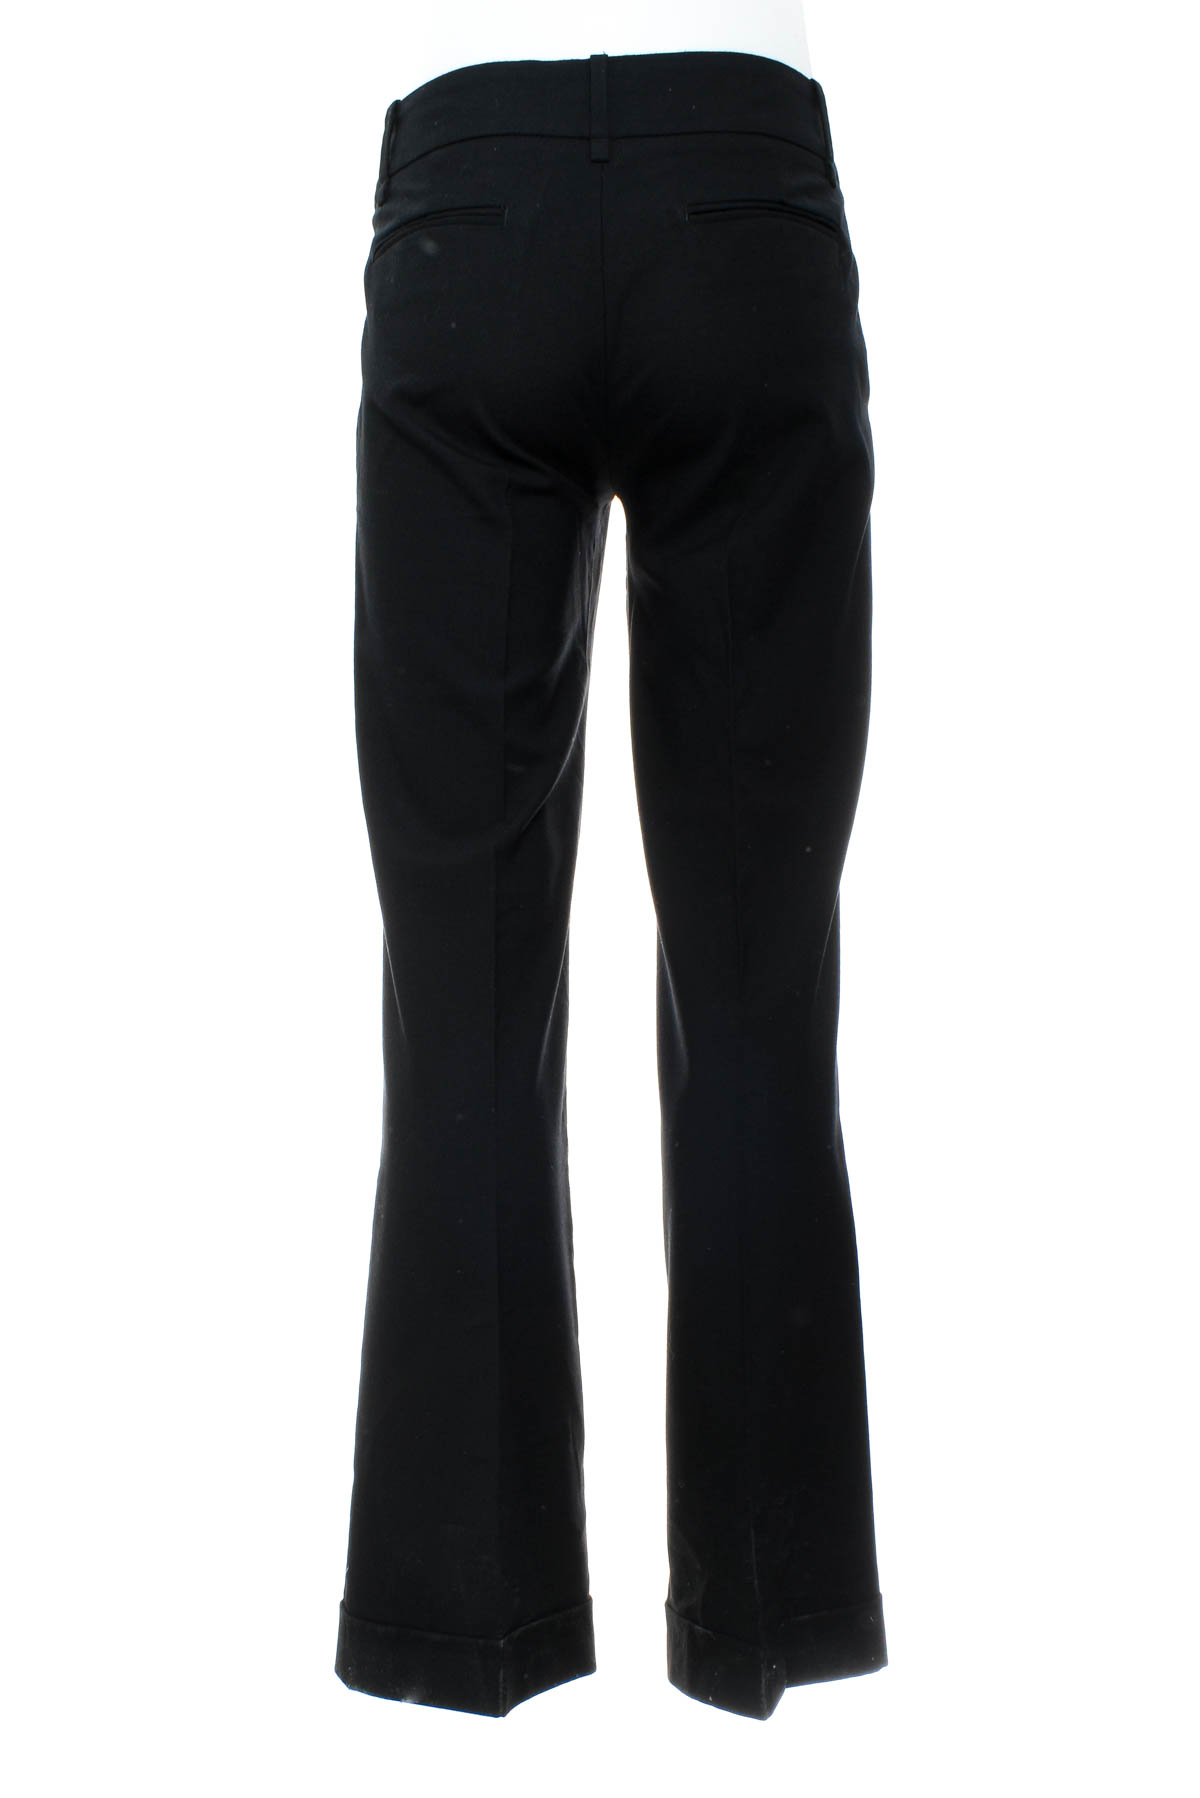 Women's trousers - ZARA Basic - 1